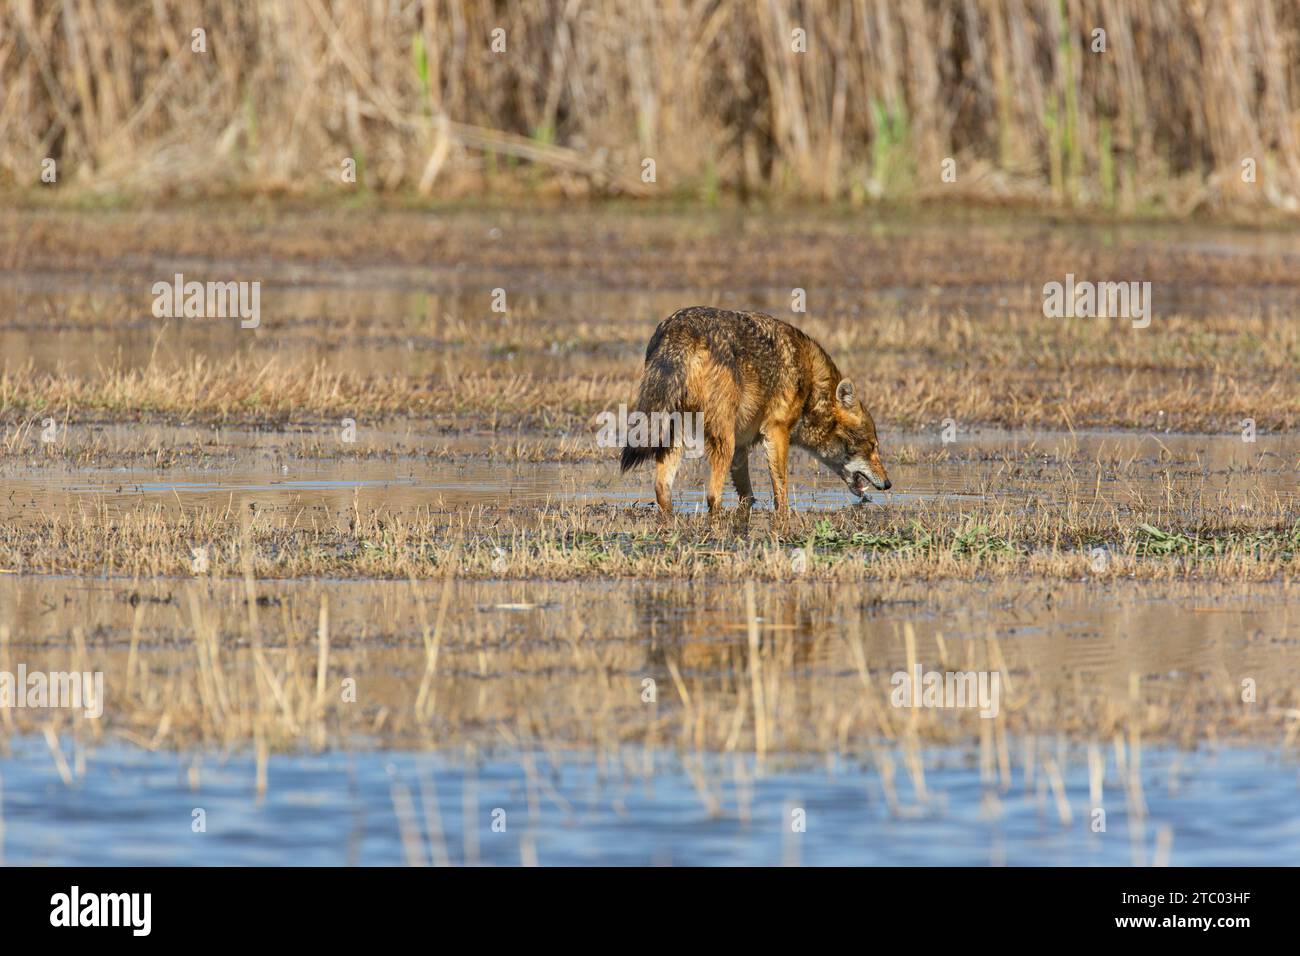 Sciacallo dorato (Canis aureus) acqua potabile Foto Stock